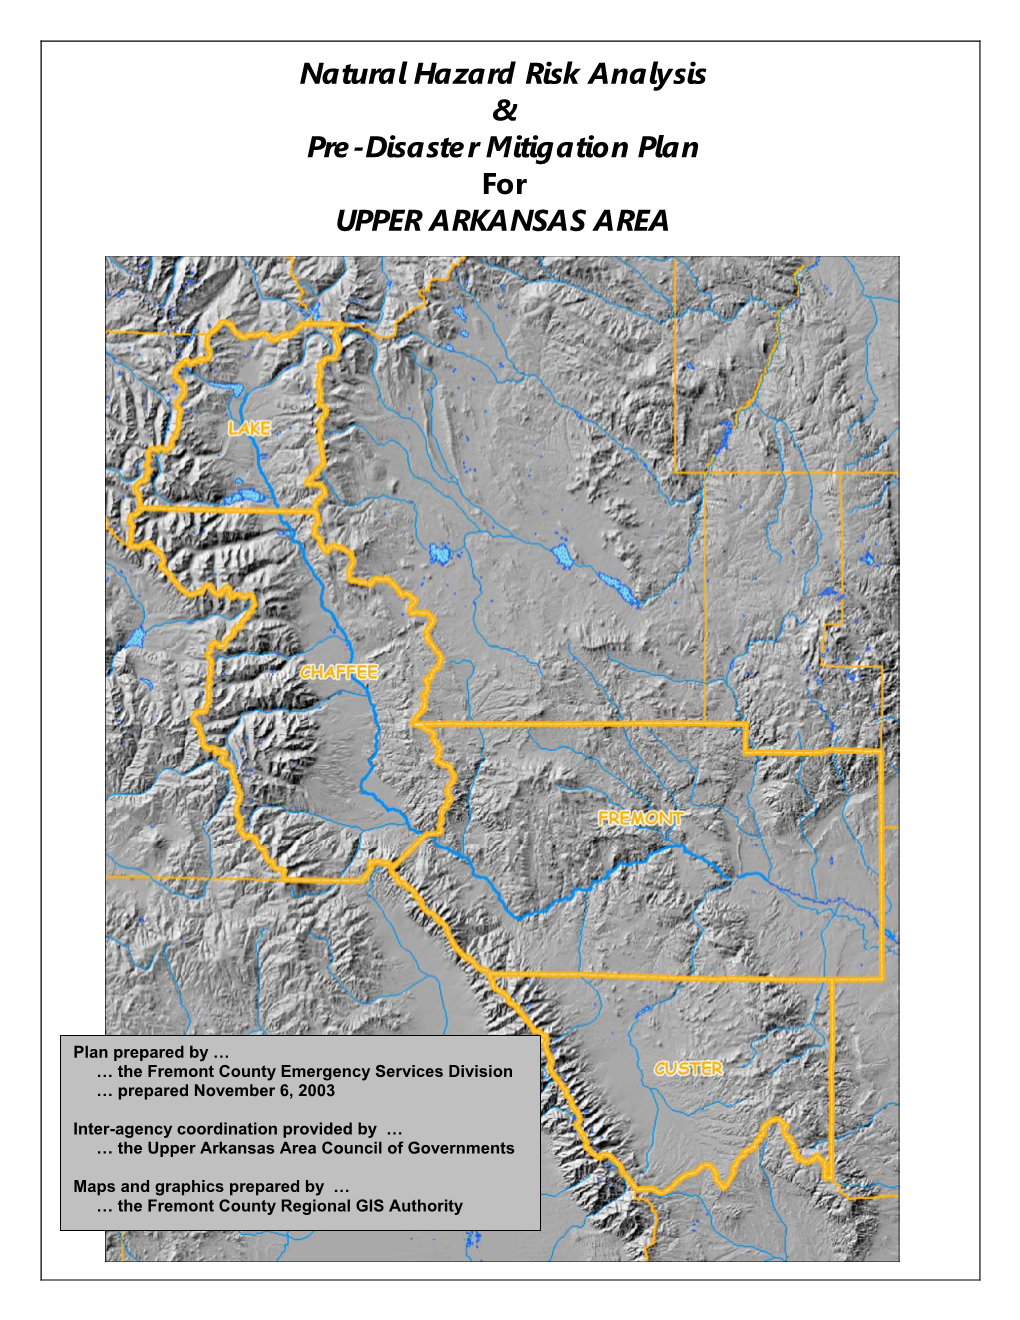 Pre-Disaster Mitigation Plan for UPPER ARKANSAS AREA